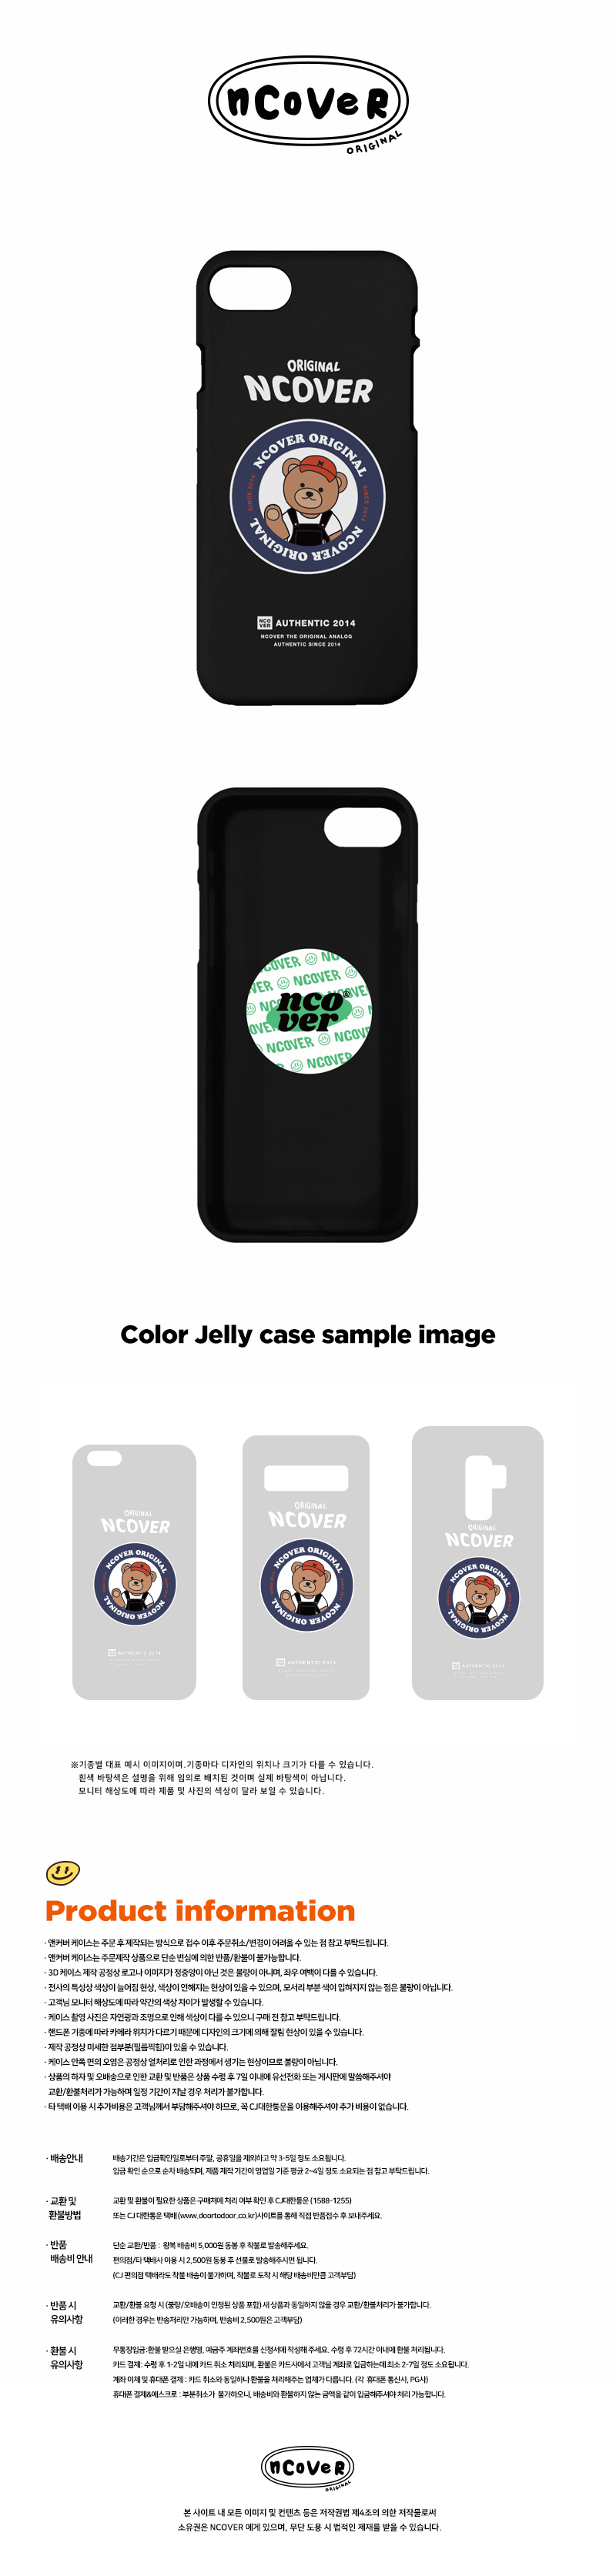  Burin badge-black(color jelly)  19,000원 - 바이인터내셔널주식회사 디지털, 모바일 액세서리, 휴대폰 케이스, 기타 스마트폰 바보사랑  Burin badge-black(color jelly)  19,000원 - 바이인터내셔널주식회사 디지털, 모바일 액세서리, 휴대폰 케이스, 기타 스마트폰 바보사랑